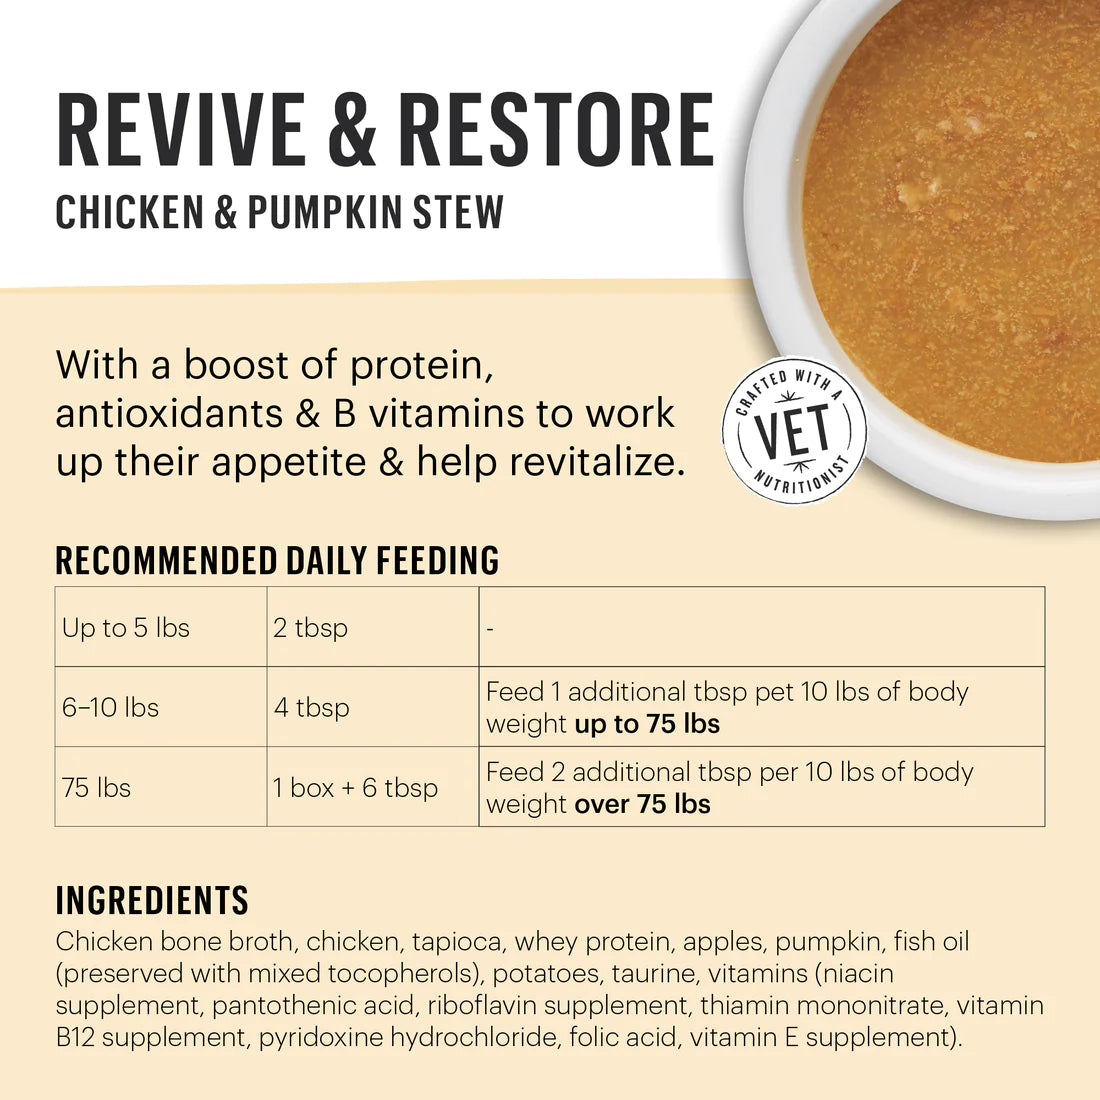 The Honest Kitchen - Functional Pour Overs - Revive & Restore Chicken & Pumpkin Stew (Wet Dog Food)